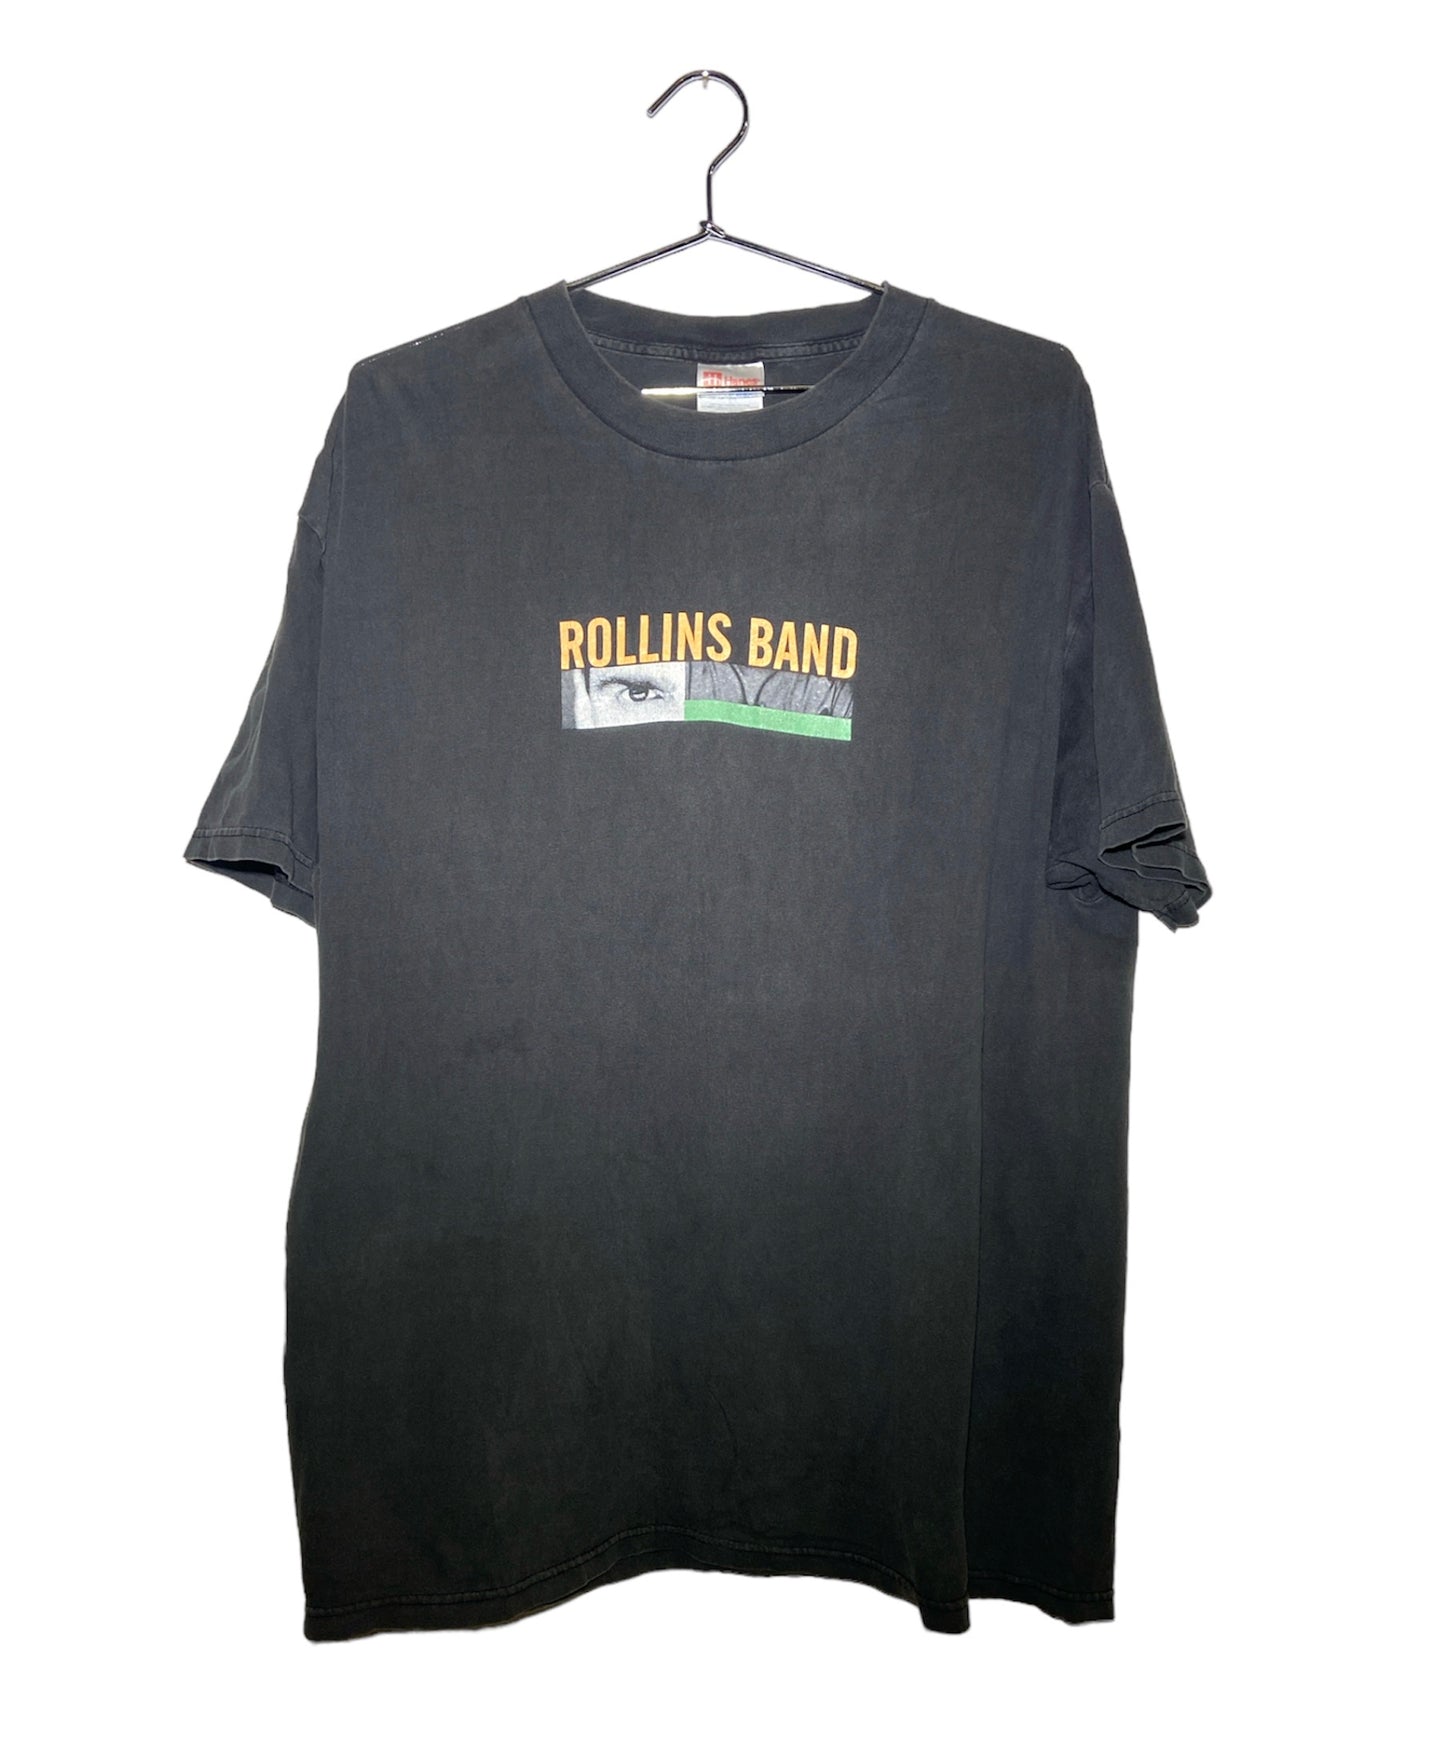 2000's Rollins Band tour t-shirt